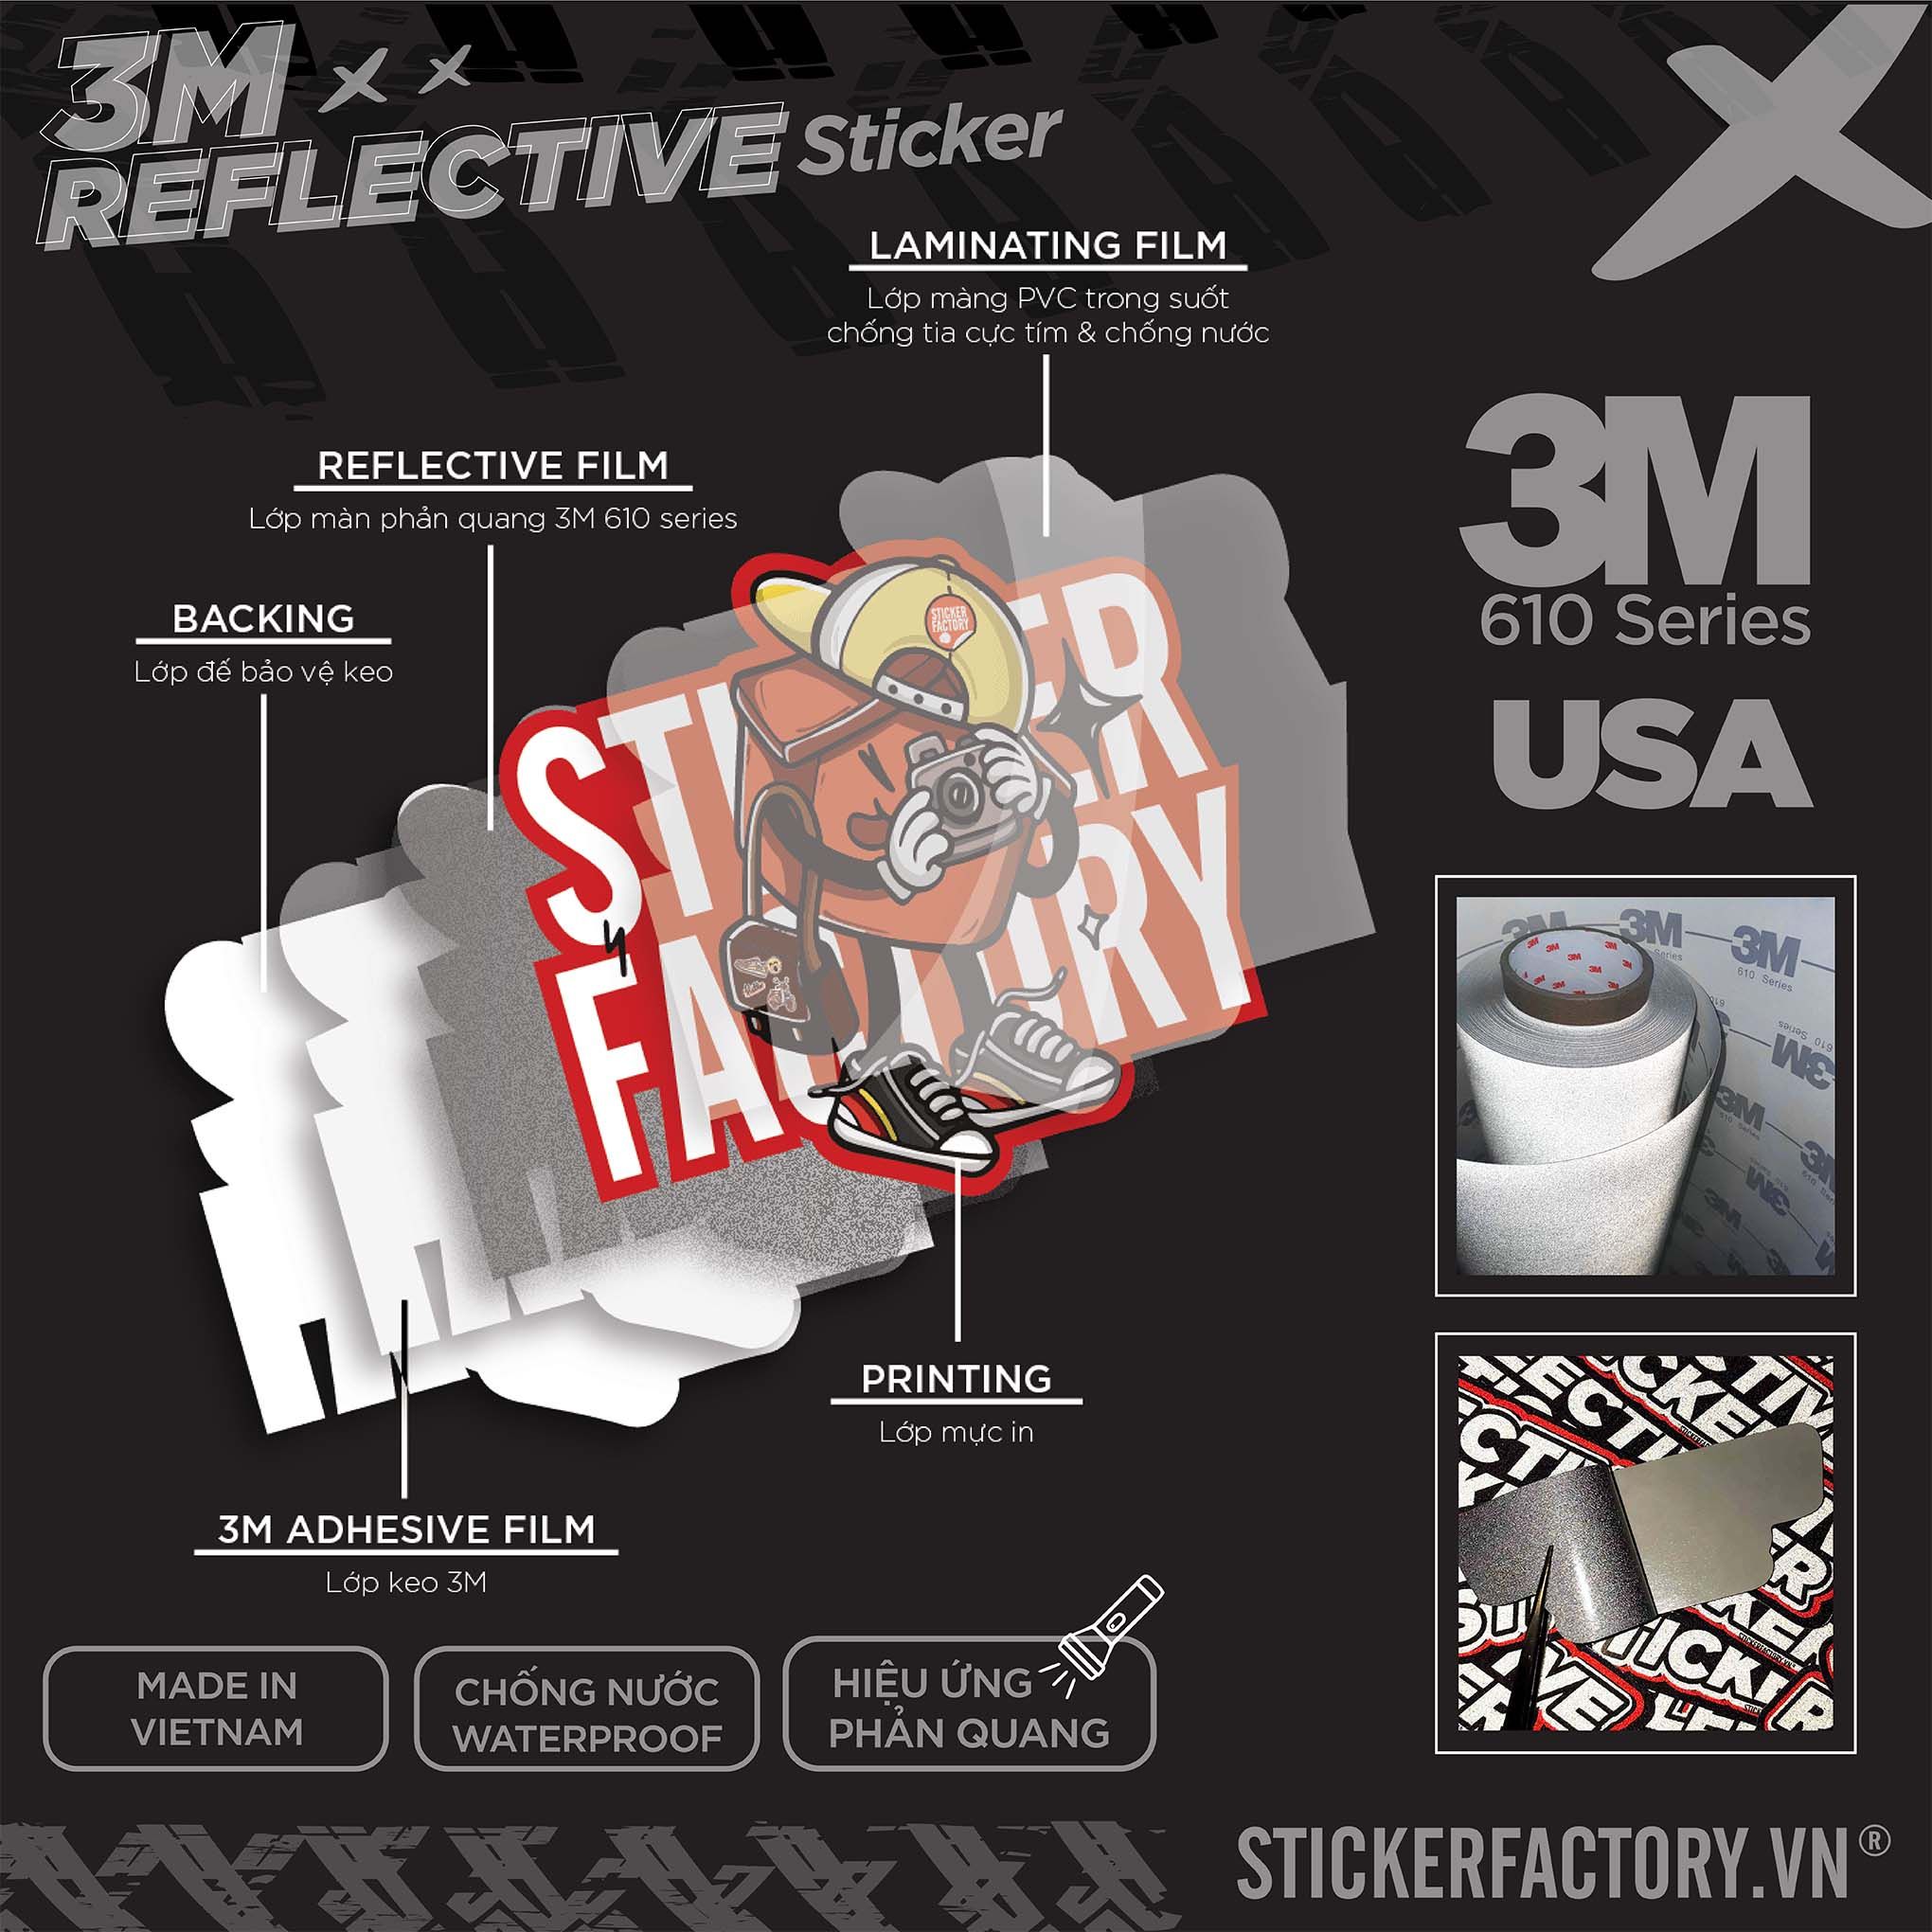 MONSTER LIGHTER 3M - Reflective Sticker Die-cut